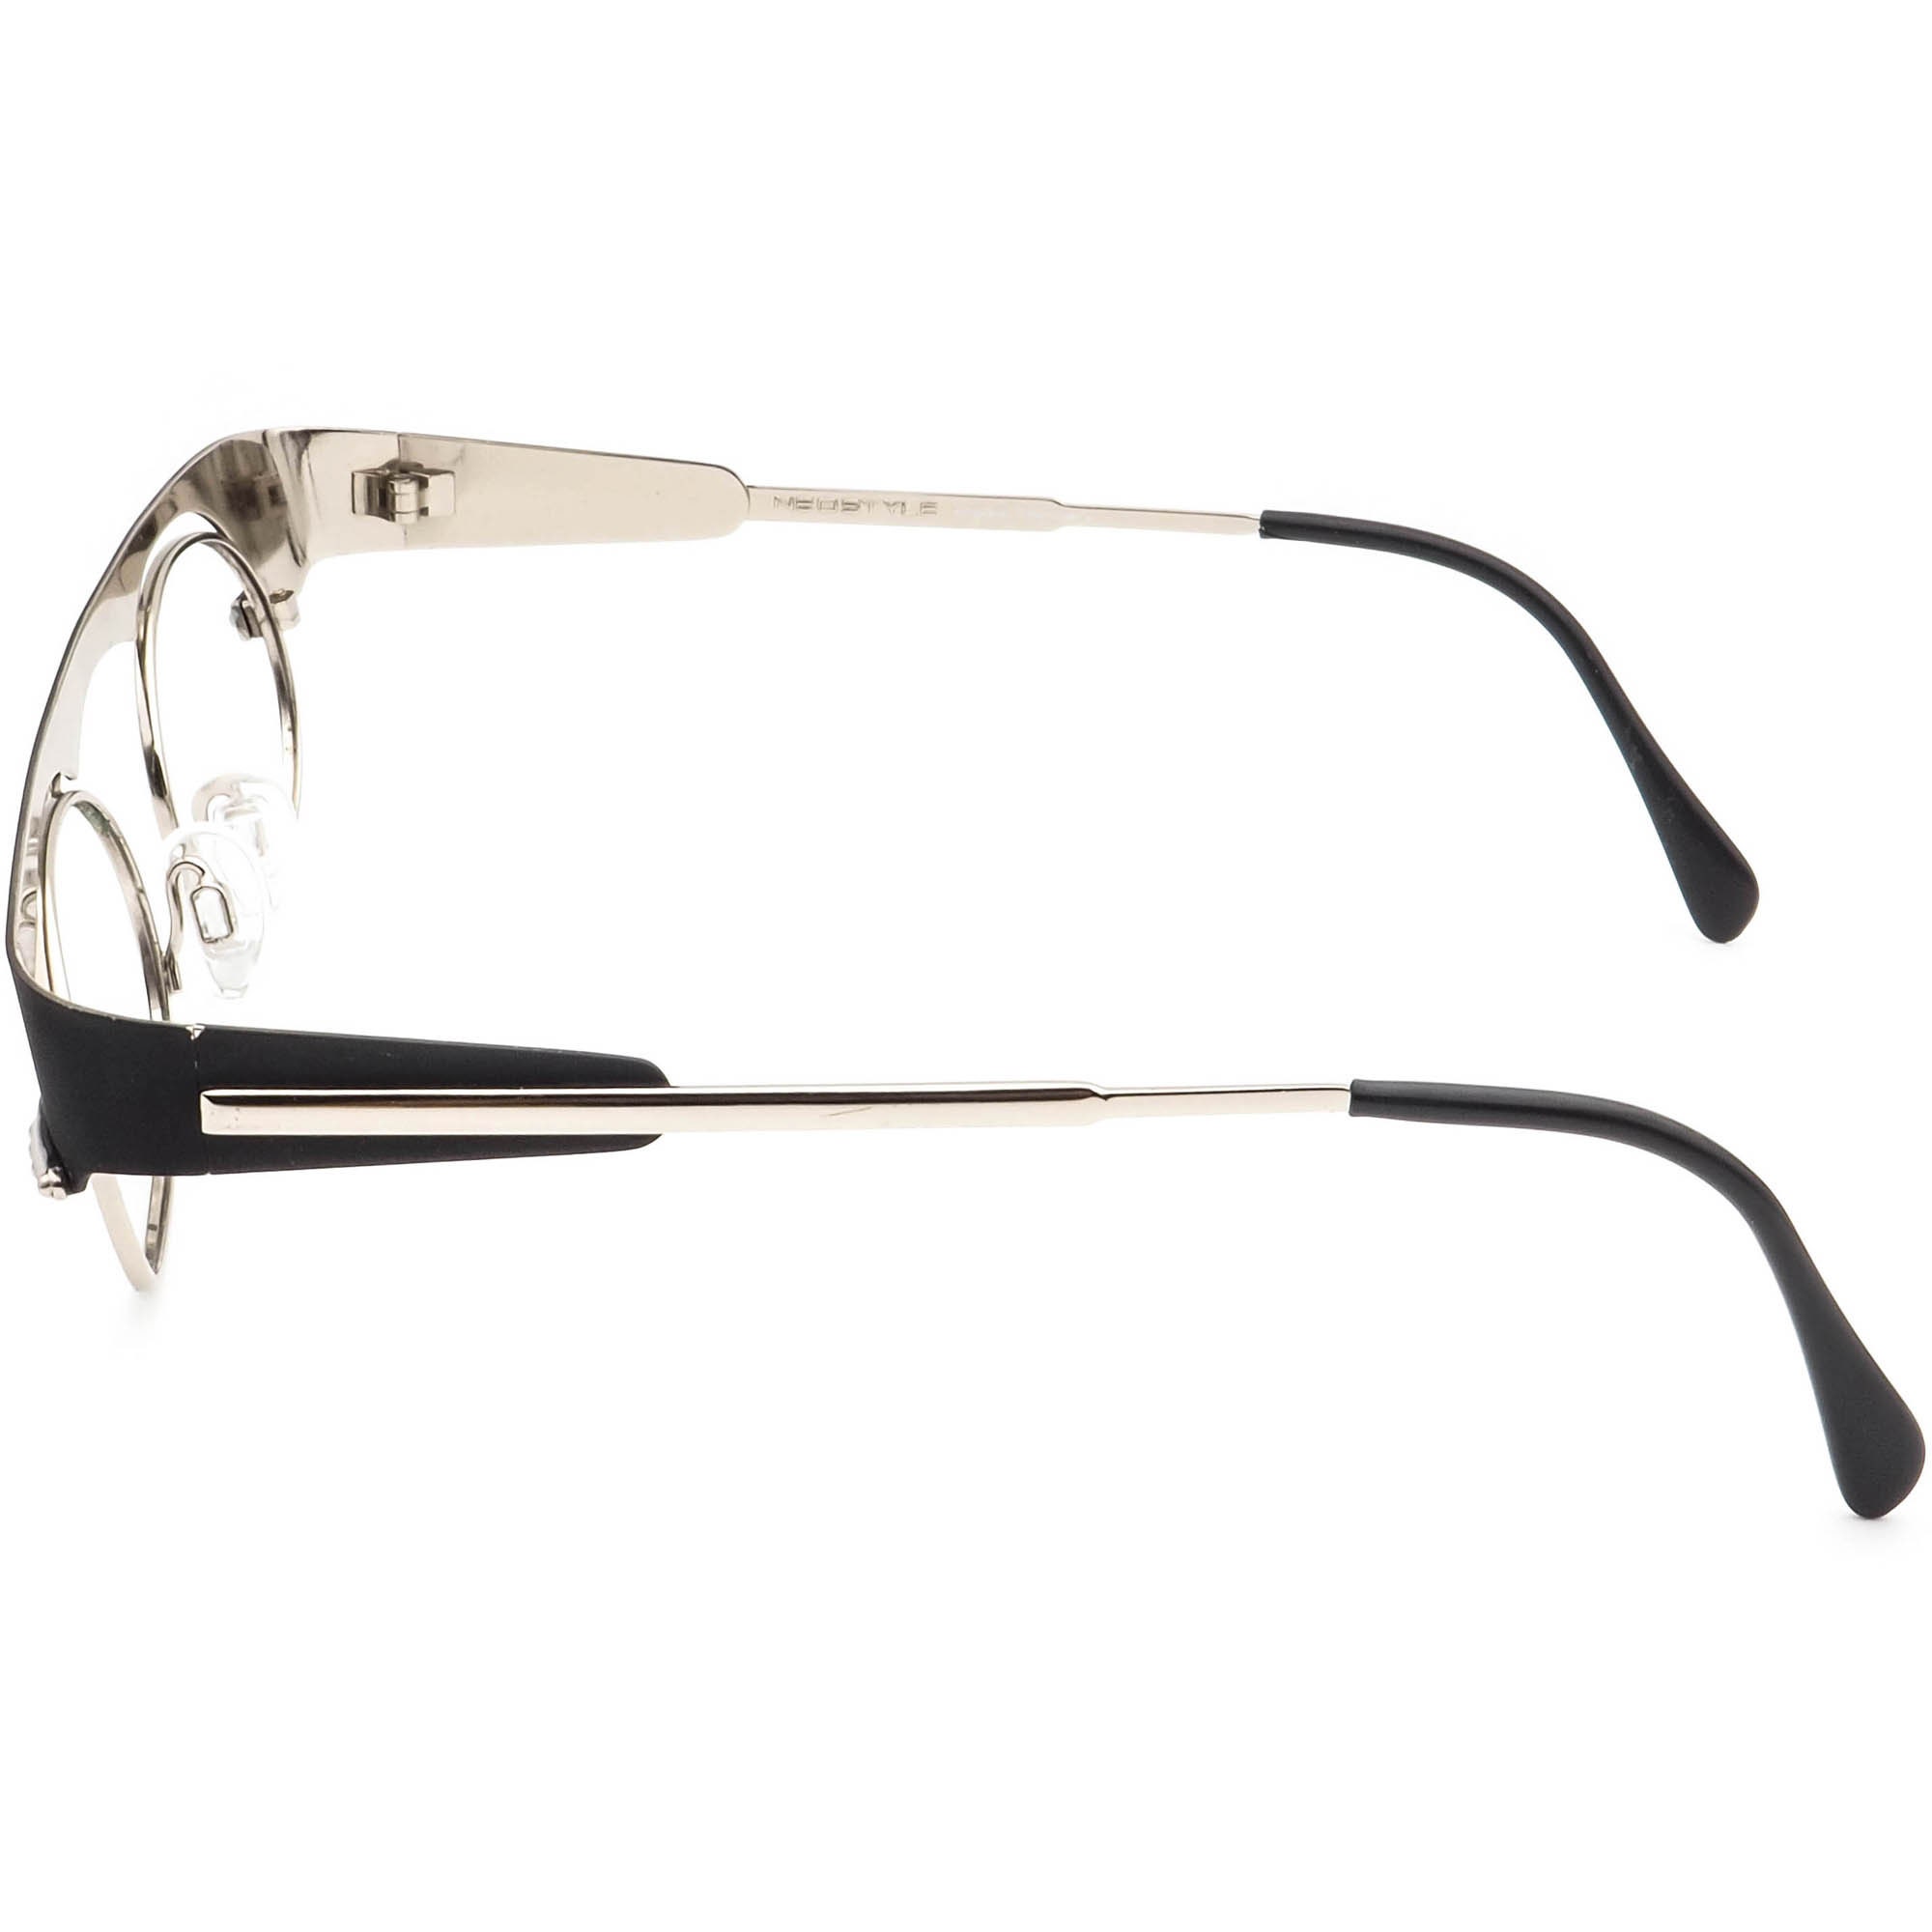 Accessories Sunglasses & Eyewear Glasses 22 140 Neostyle Vintage Eyeglasses Jet 249 900 Matte Black&Silver Germany 47 